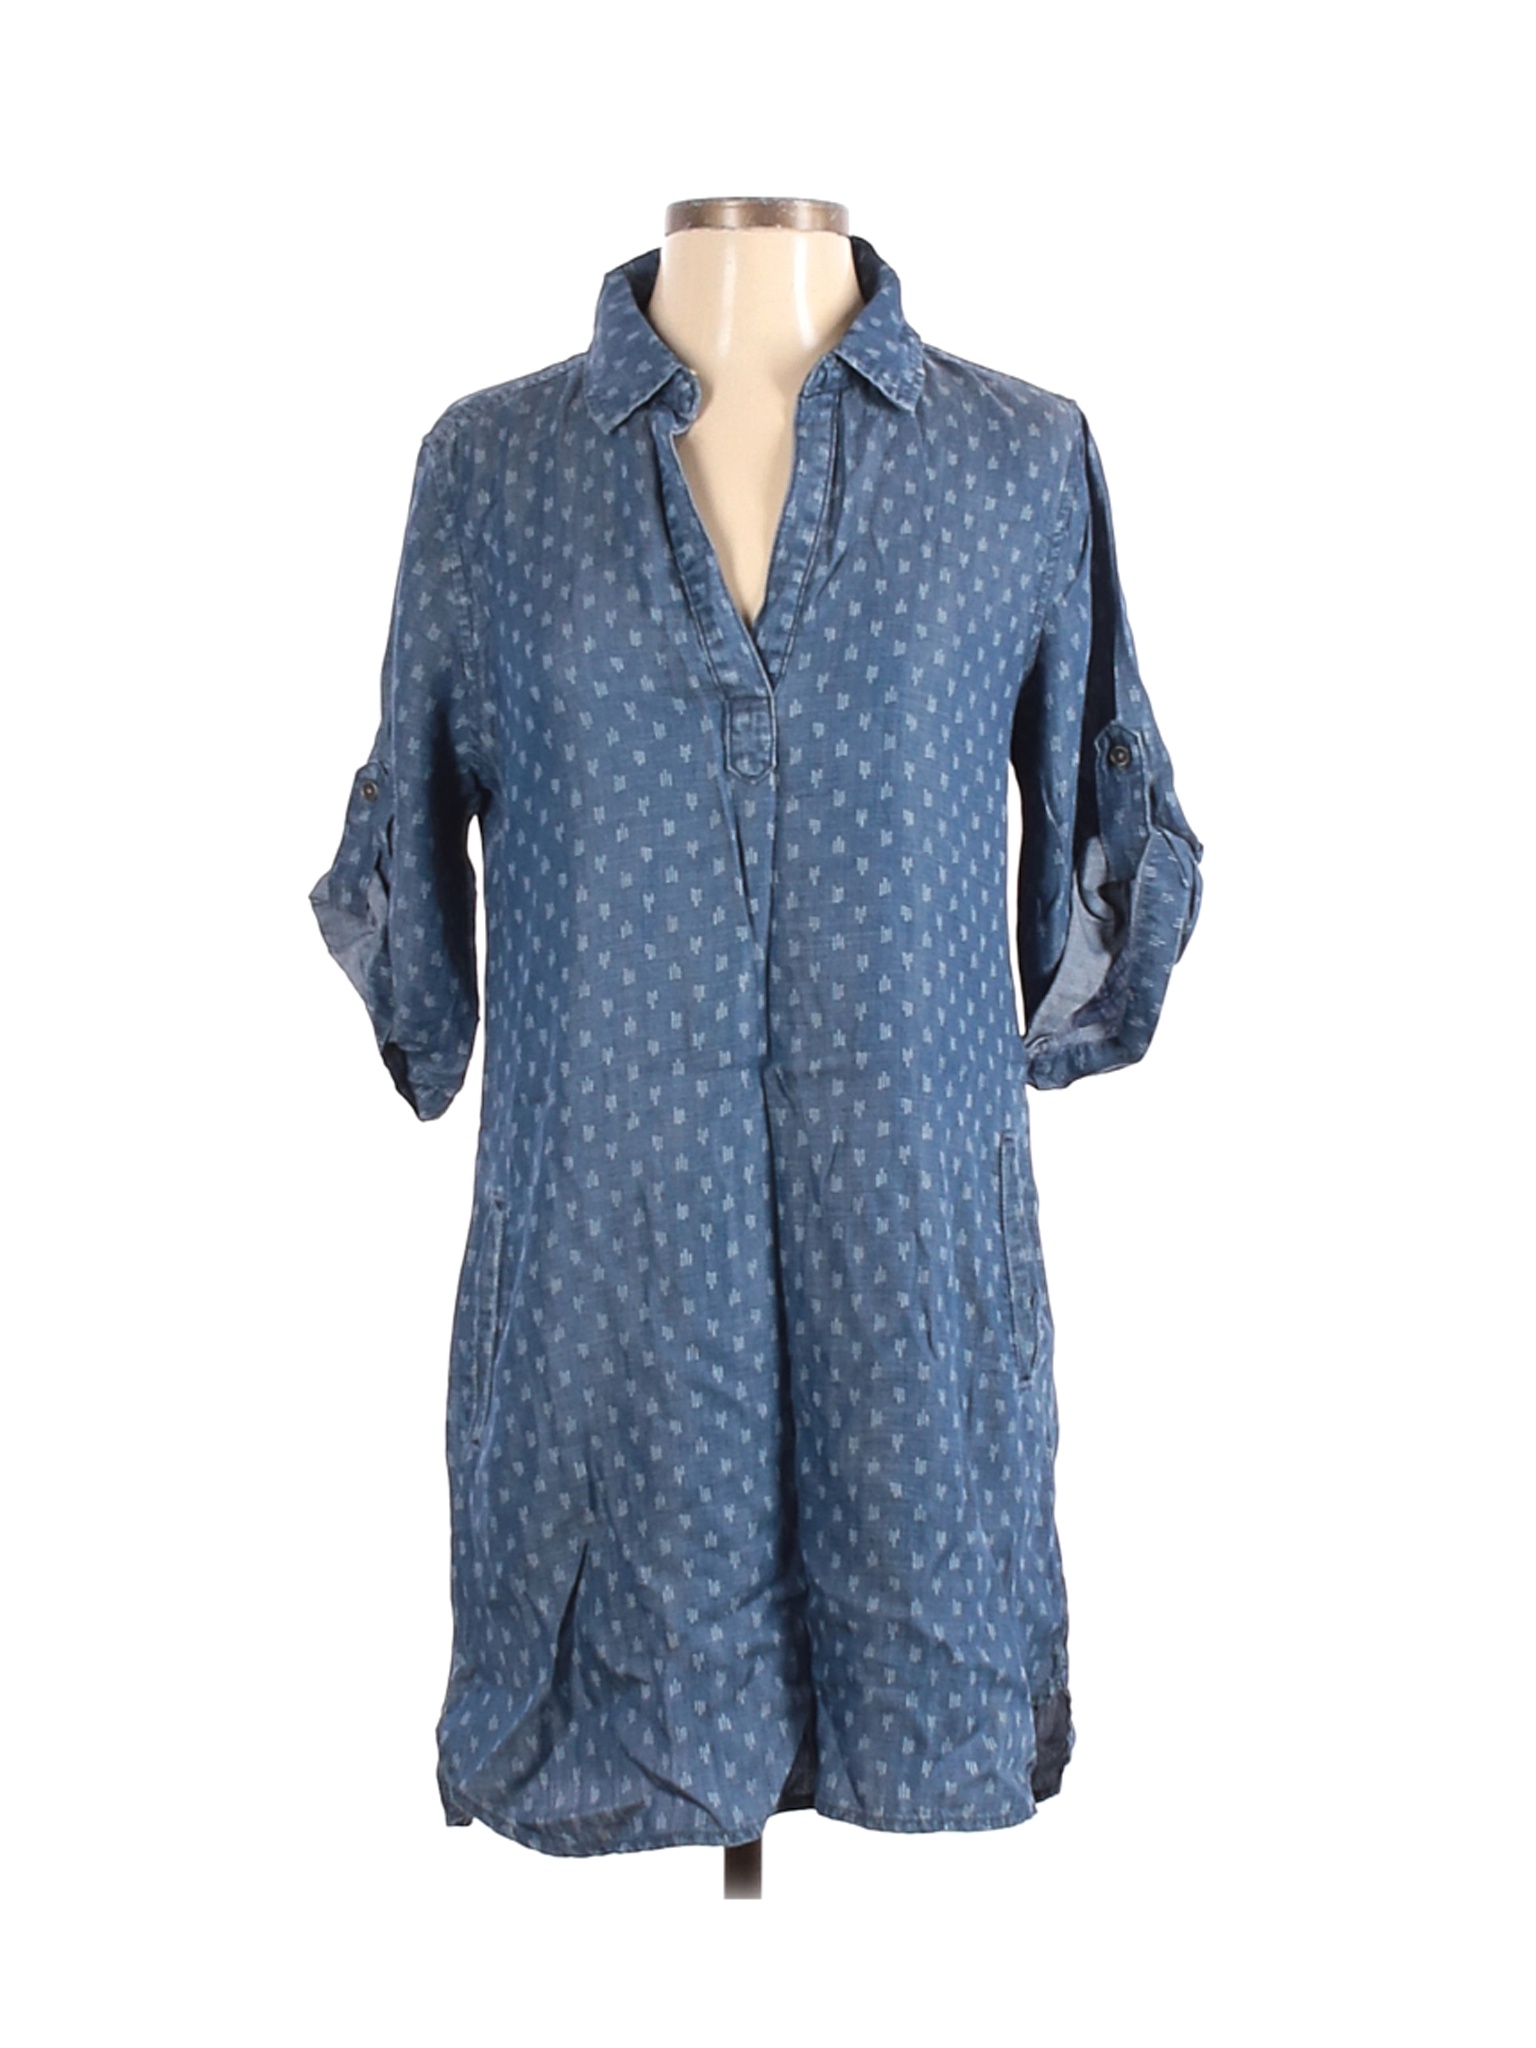 Cloth & Stone Women Blue Casual Dress S | eBay